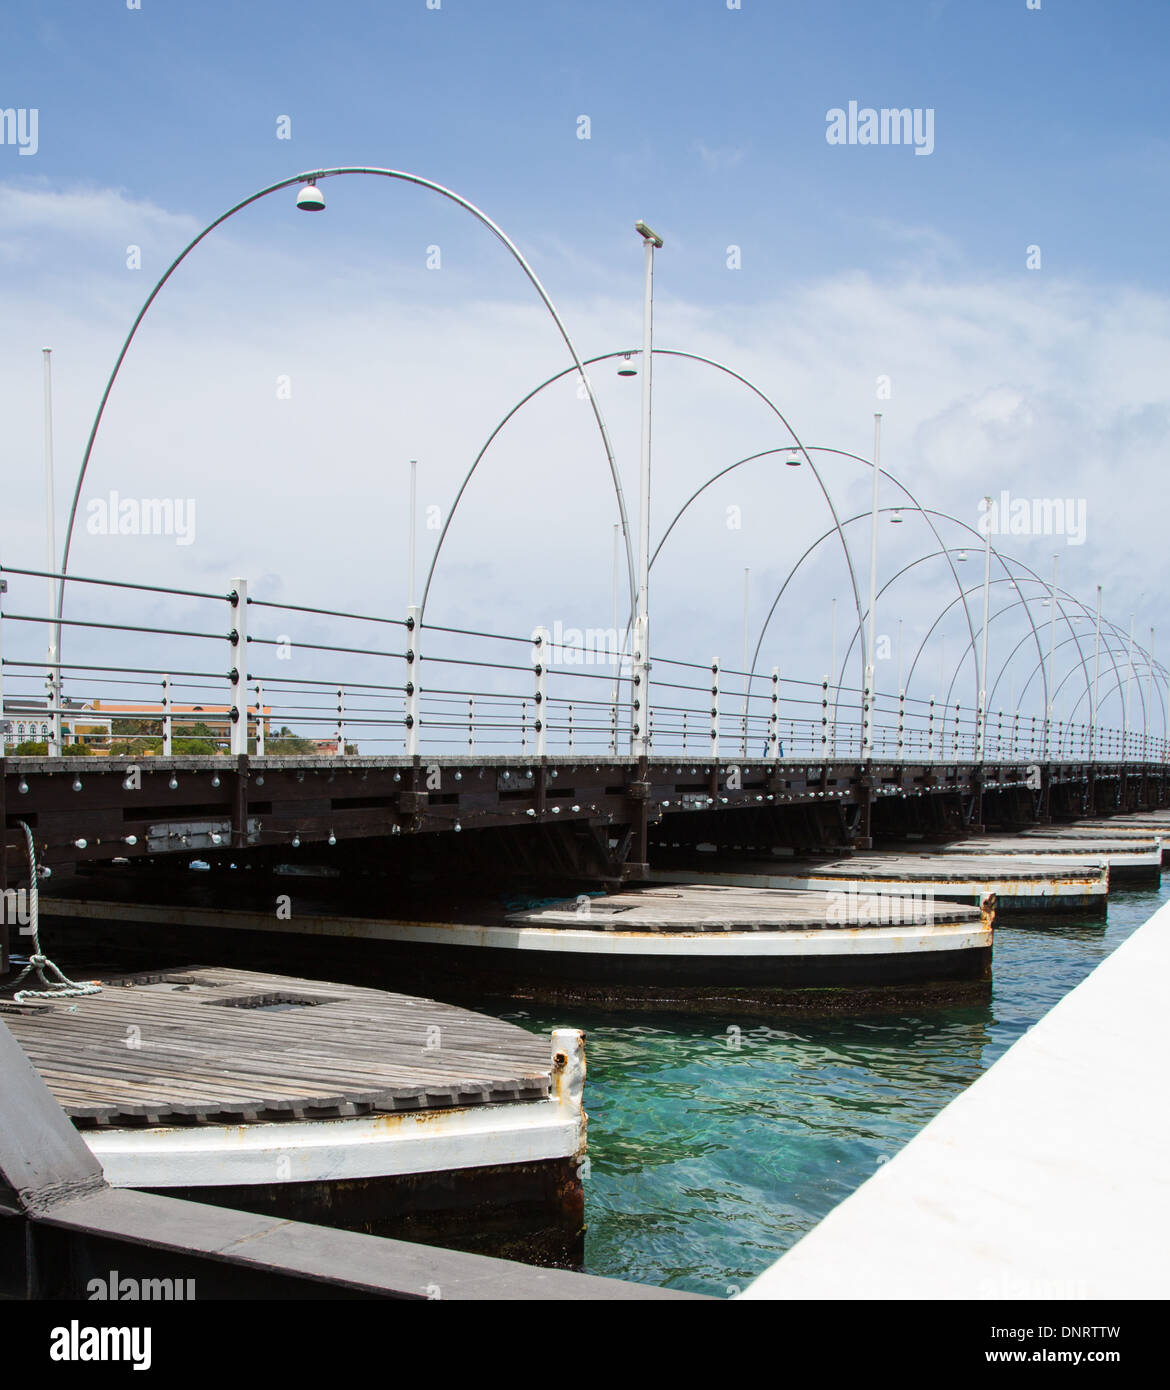 The Pedestrian pontoon bridge in Willemstad, Curacao. Stock Photo